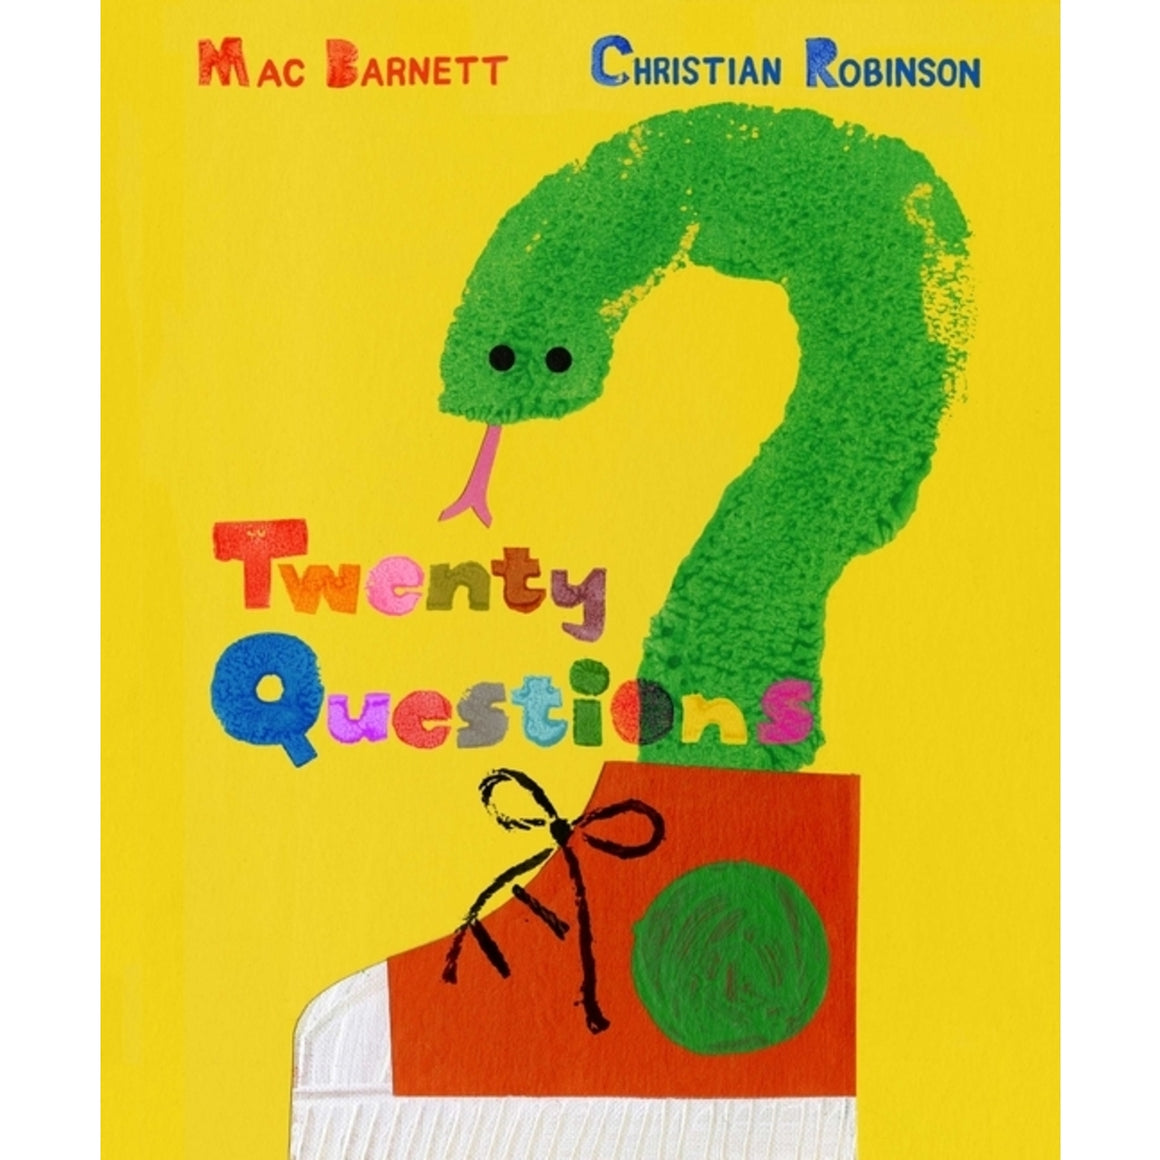 Twenty Questions | Author: Mac Barnett